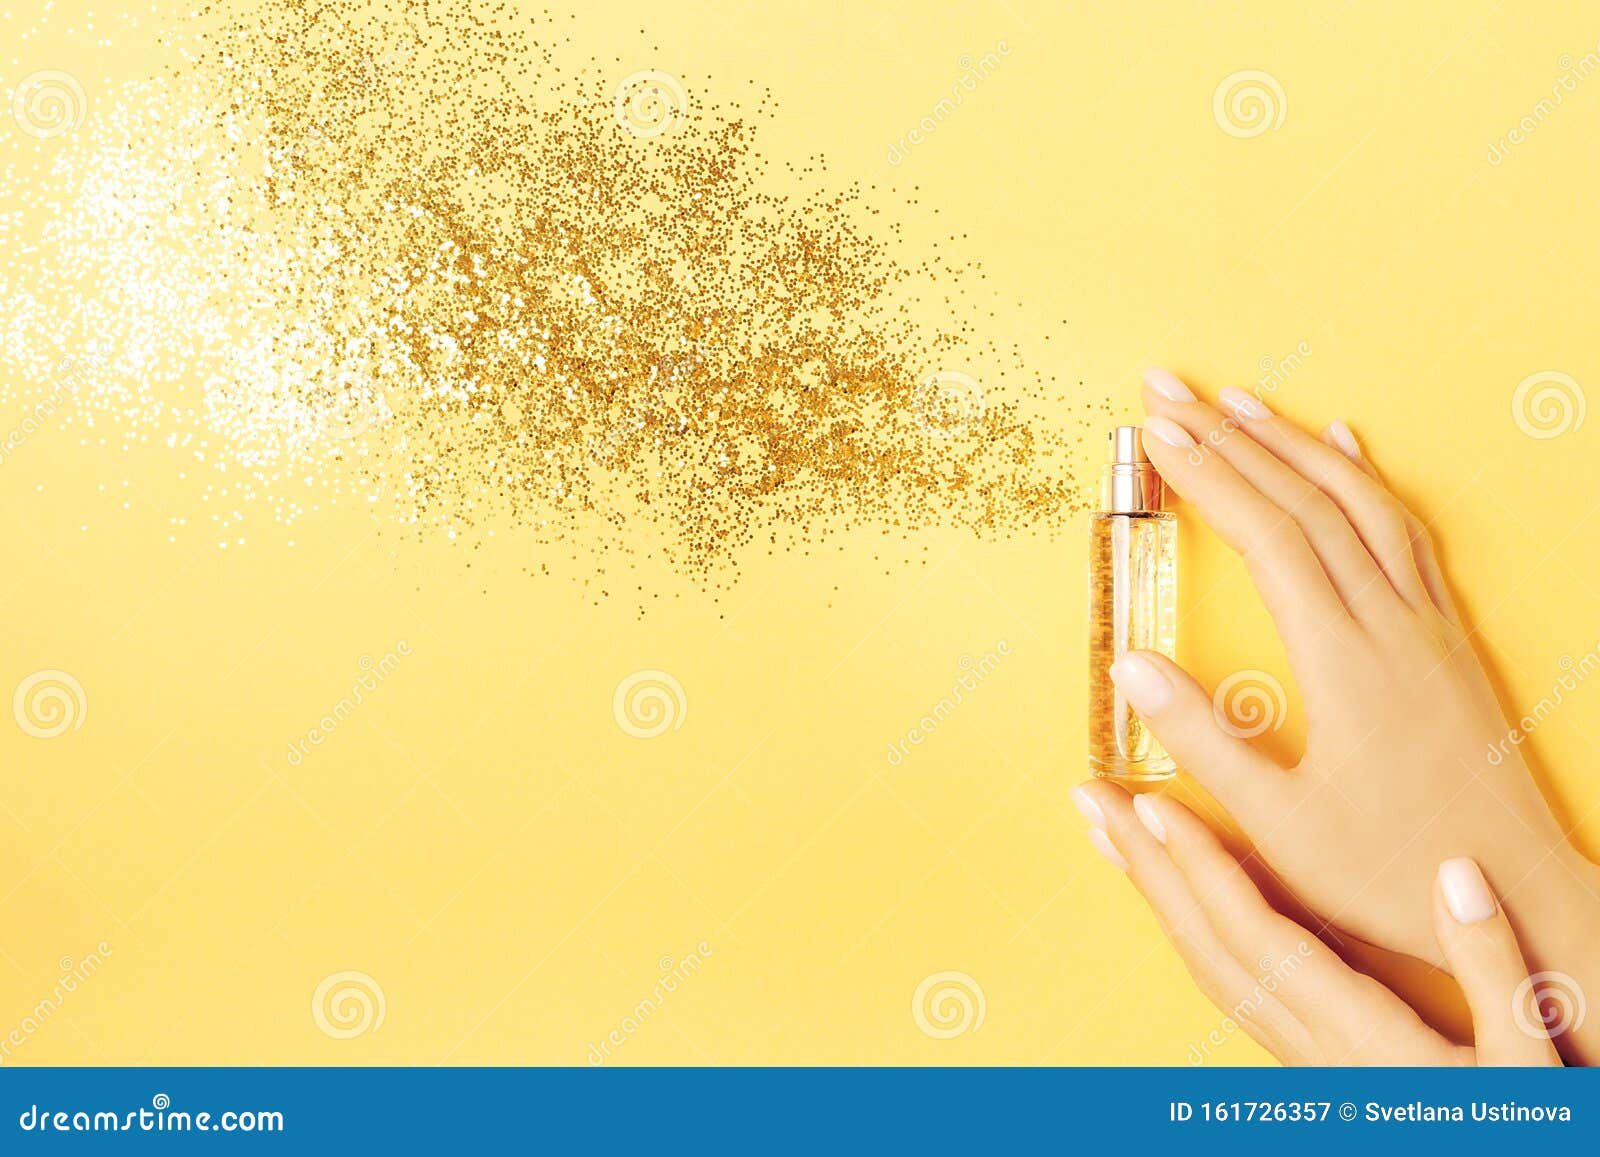 Luxury Perfume Concept. Female Hands Holding Stylish Bottle of Perfume with  Spray of Sparkles on Yellow Background Stock Image - Image of color,  feminine: 161726357